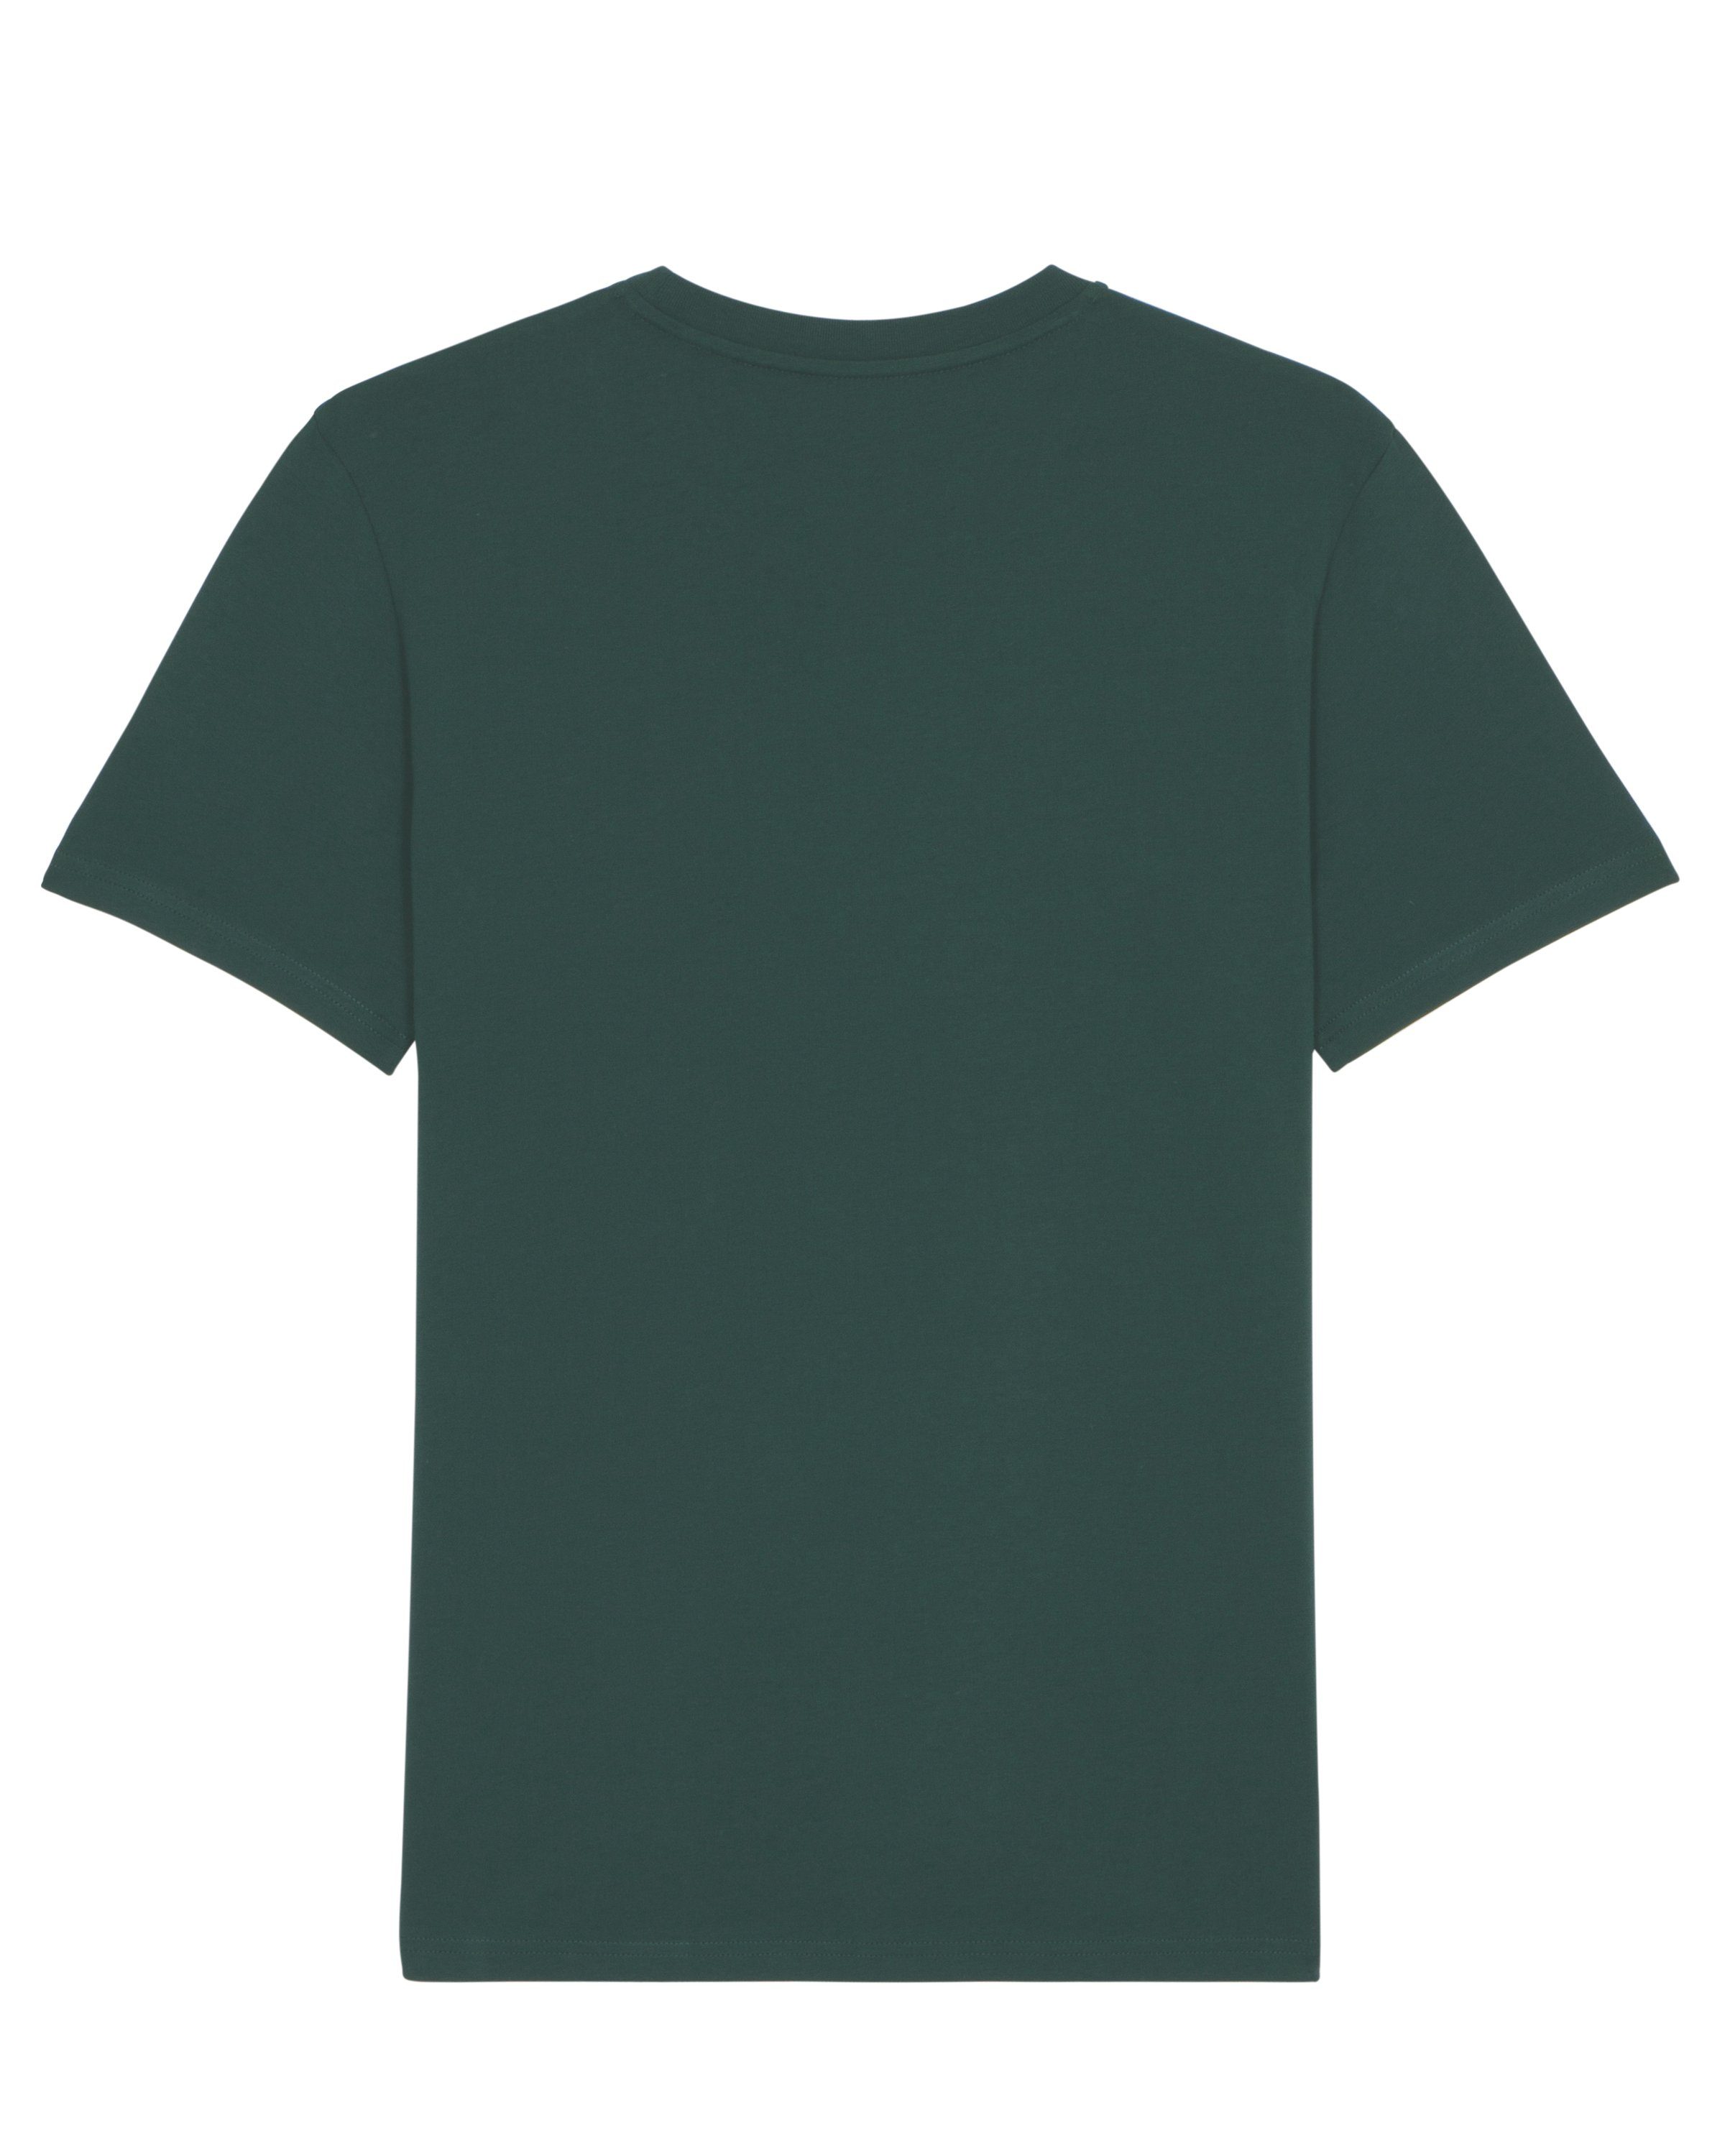 (1-tlg) Astronaut paper boat Apparel in grün glazed Print-Shirt wat?